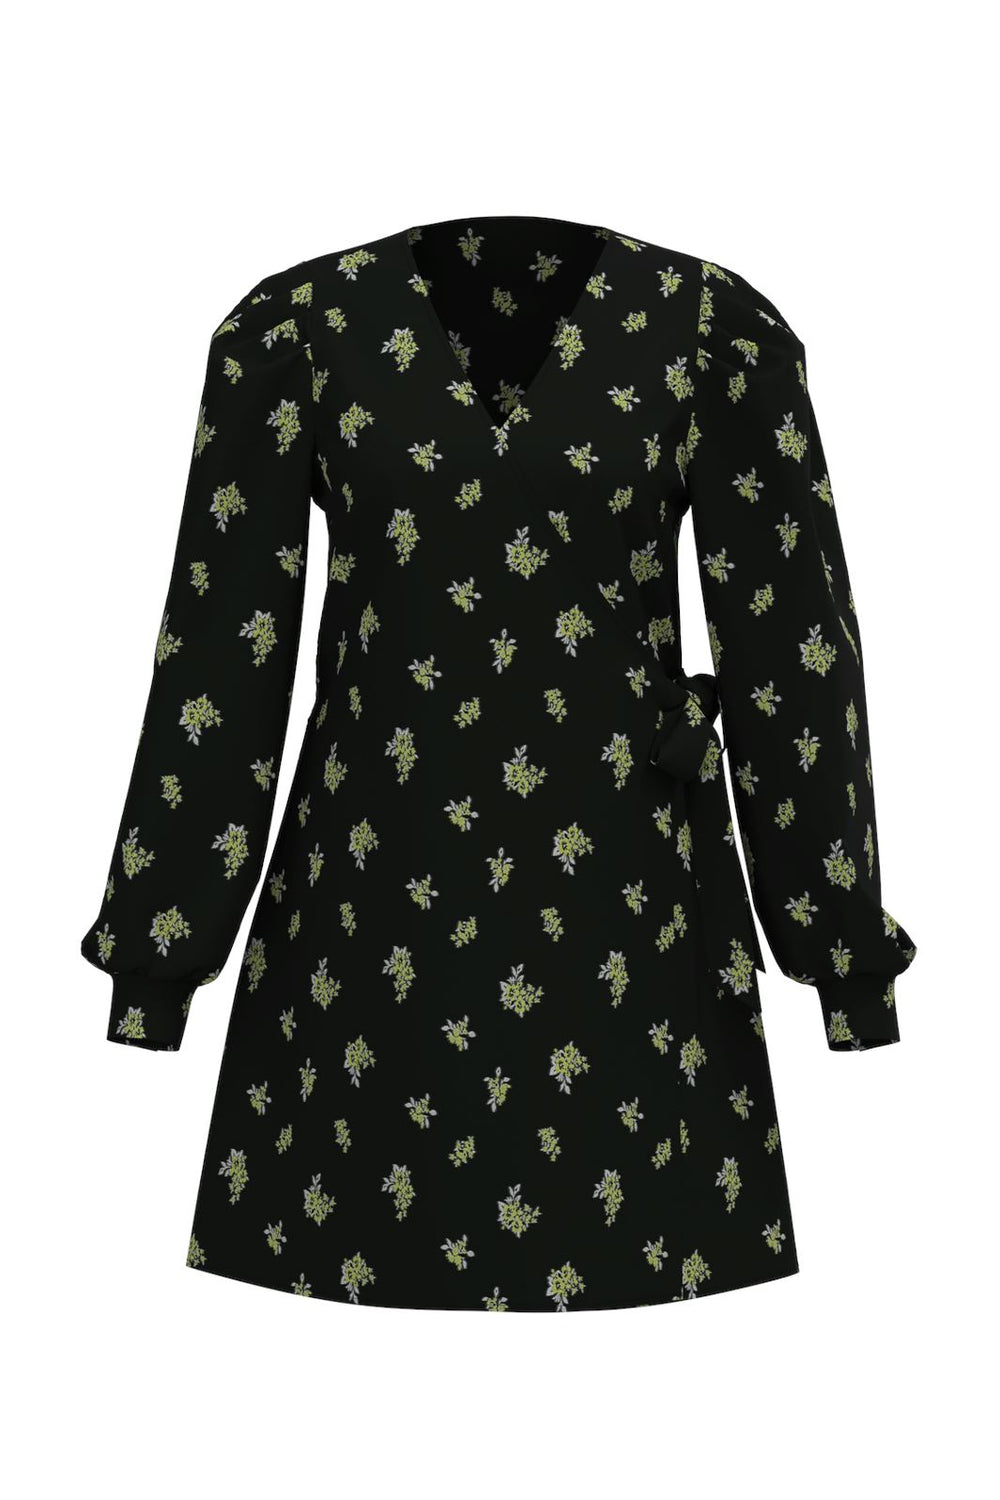 Pieces - Pcliva Ls Wrap Dress - 4581111 Black Green Flowers